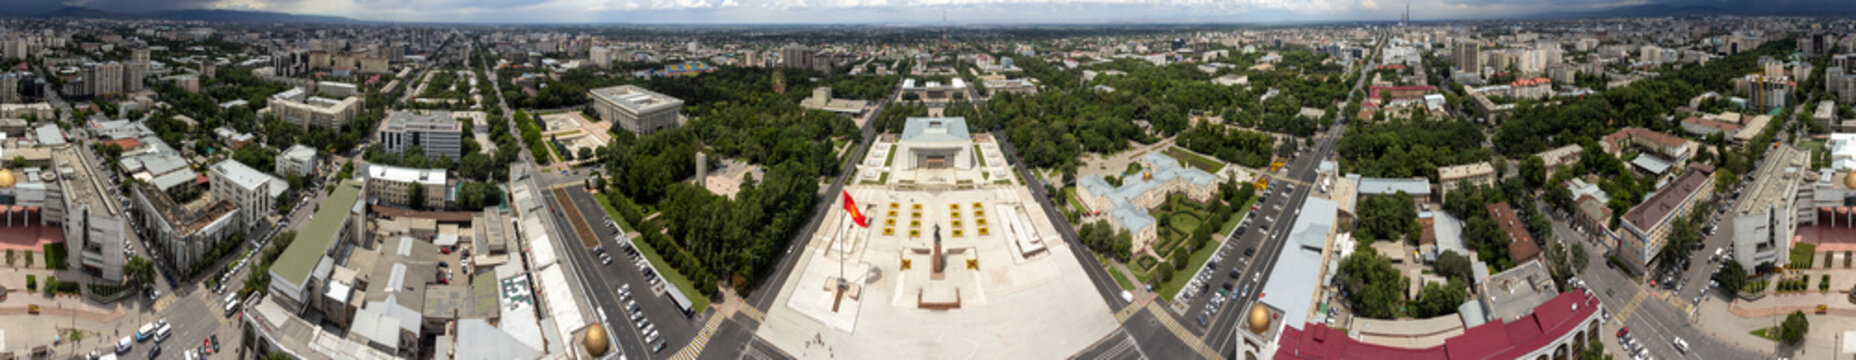 Aerial 360 degree panorama of the city center of Bishkek, capital of Kyrgyzstan